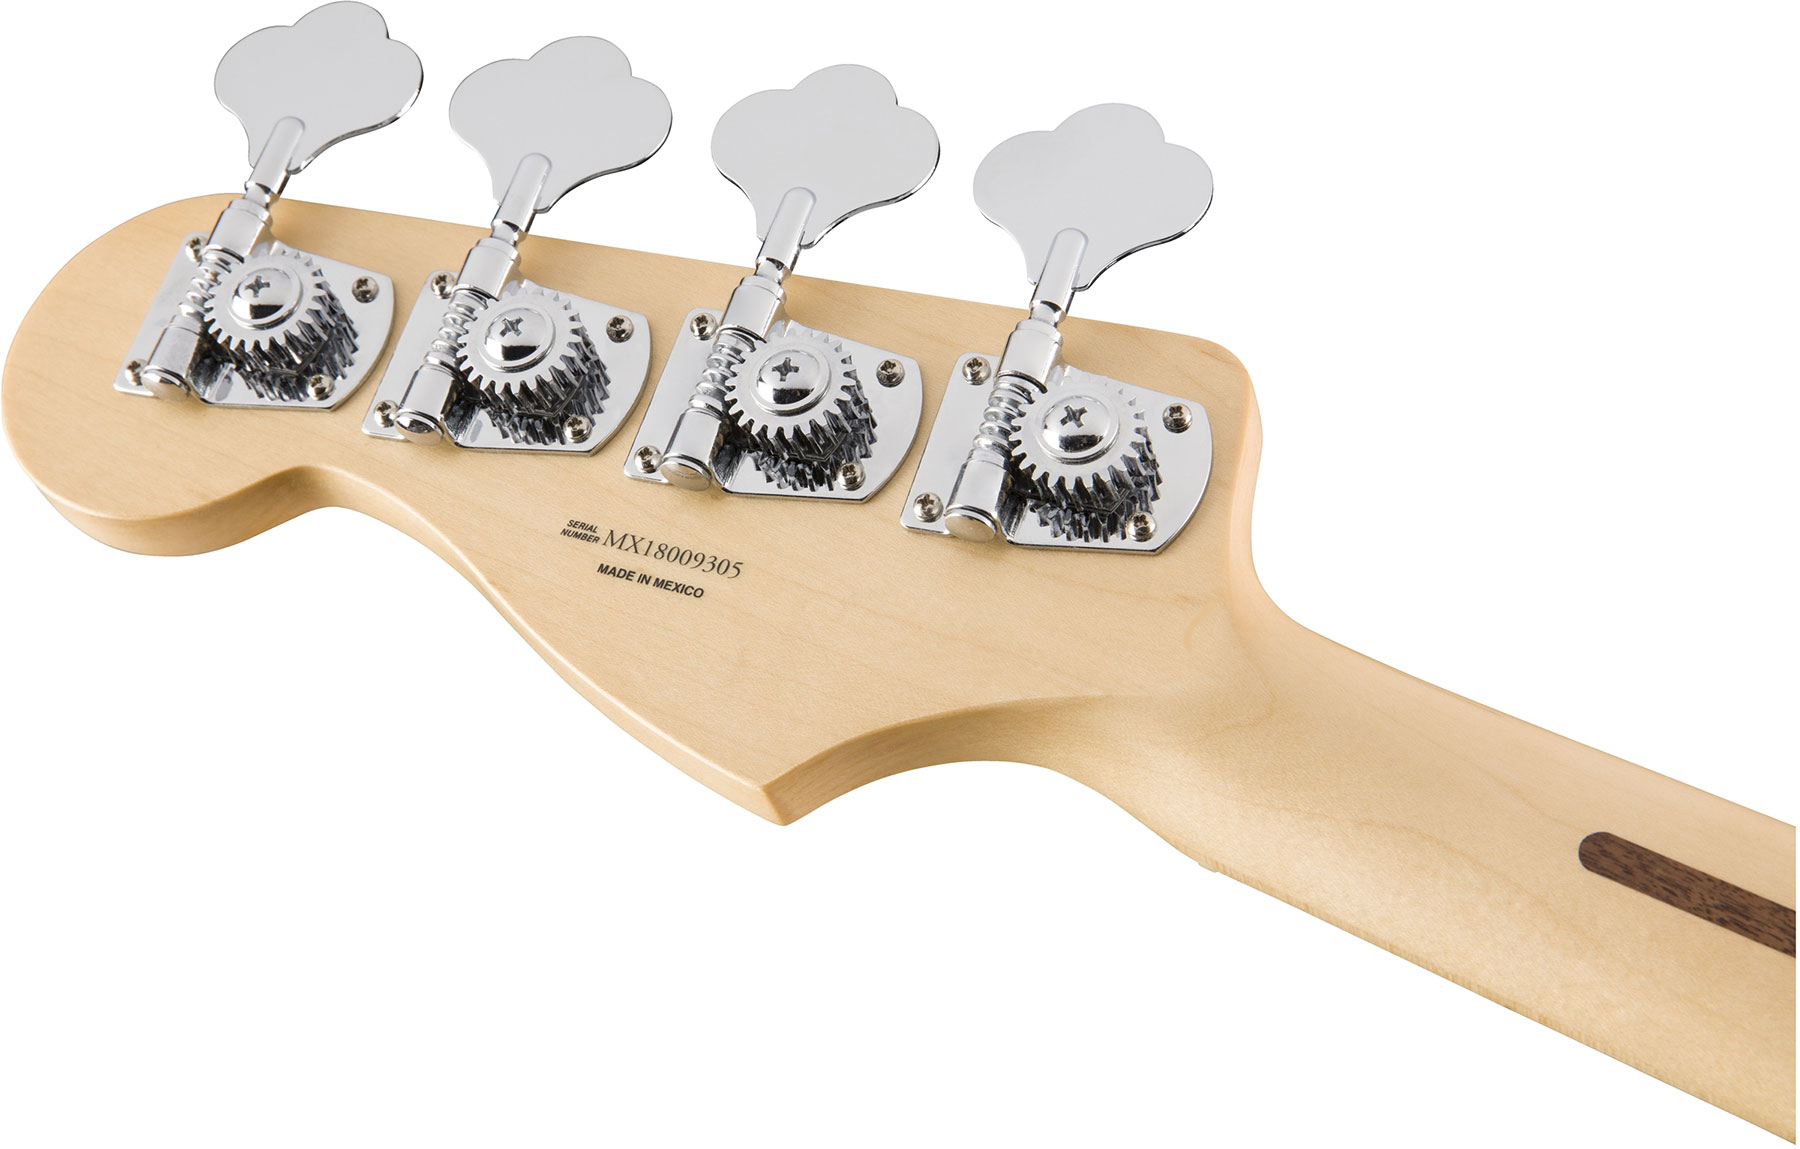 Fender Jaguar Bass Player Mex Mn - Tidepool - Bajo eléctrico de cuerpo sólido - Variation 4